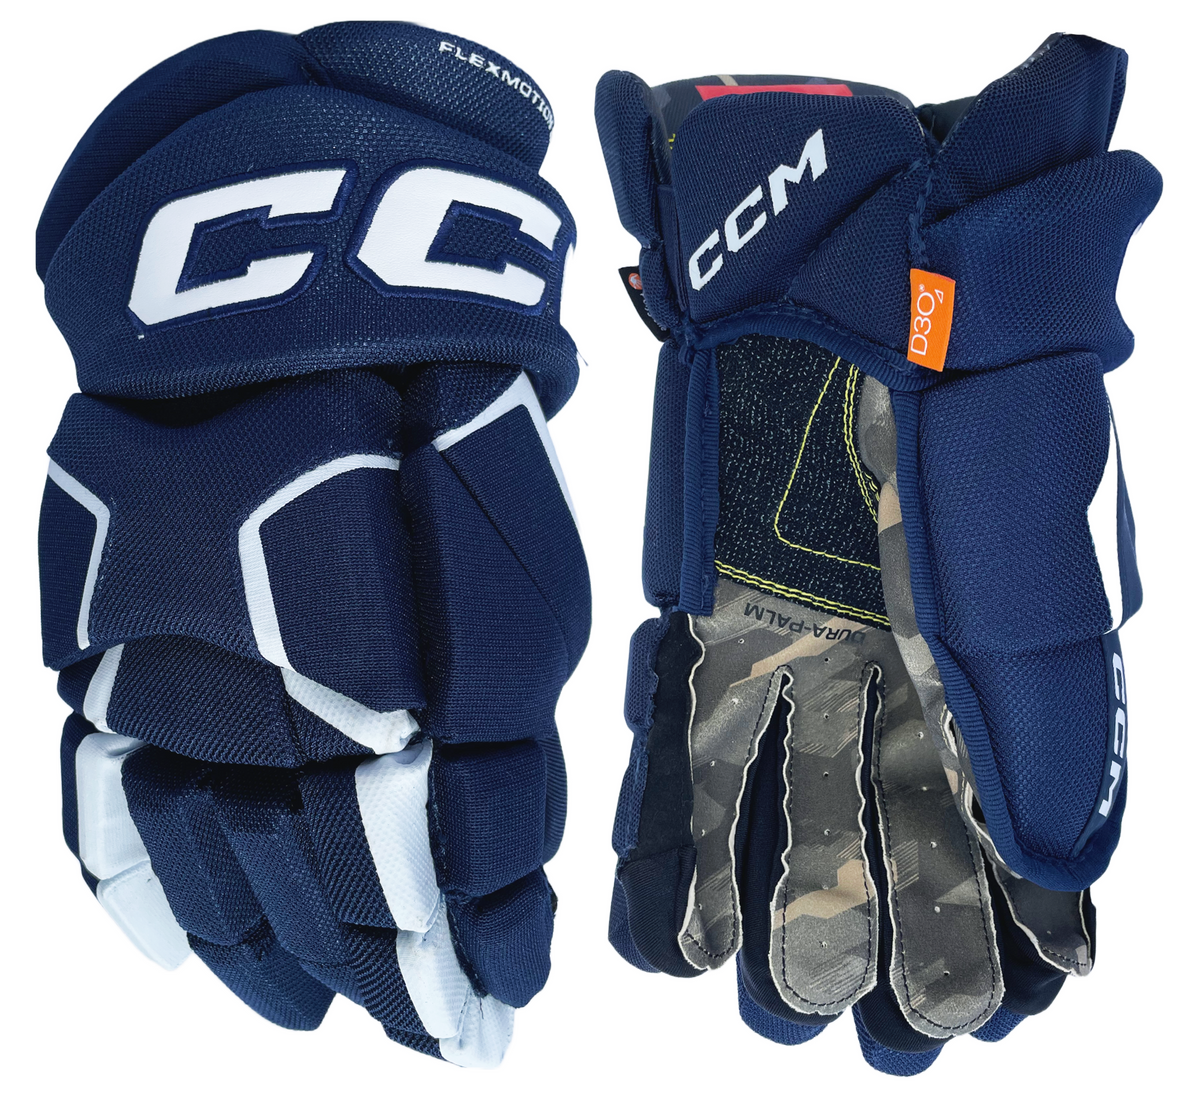 CCM Tacks AS-V Senior Hockey Gloves